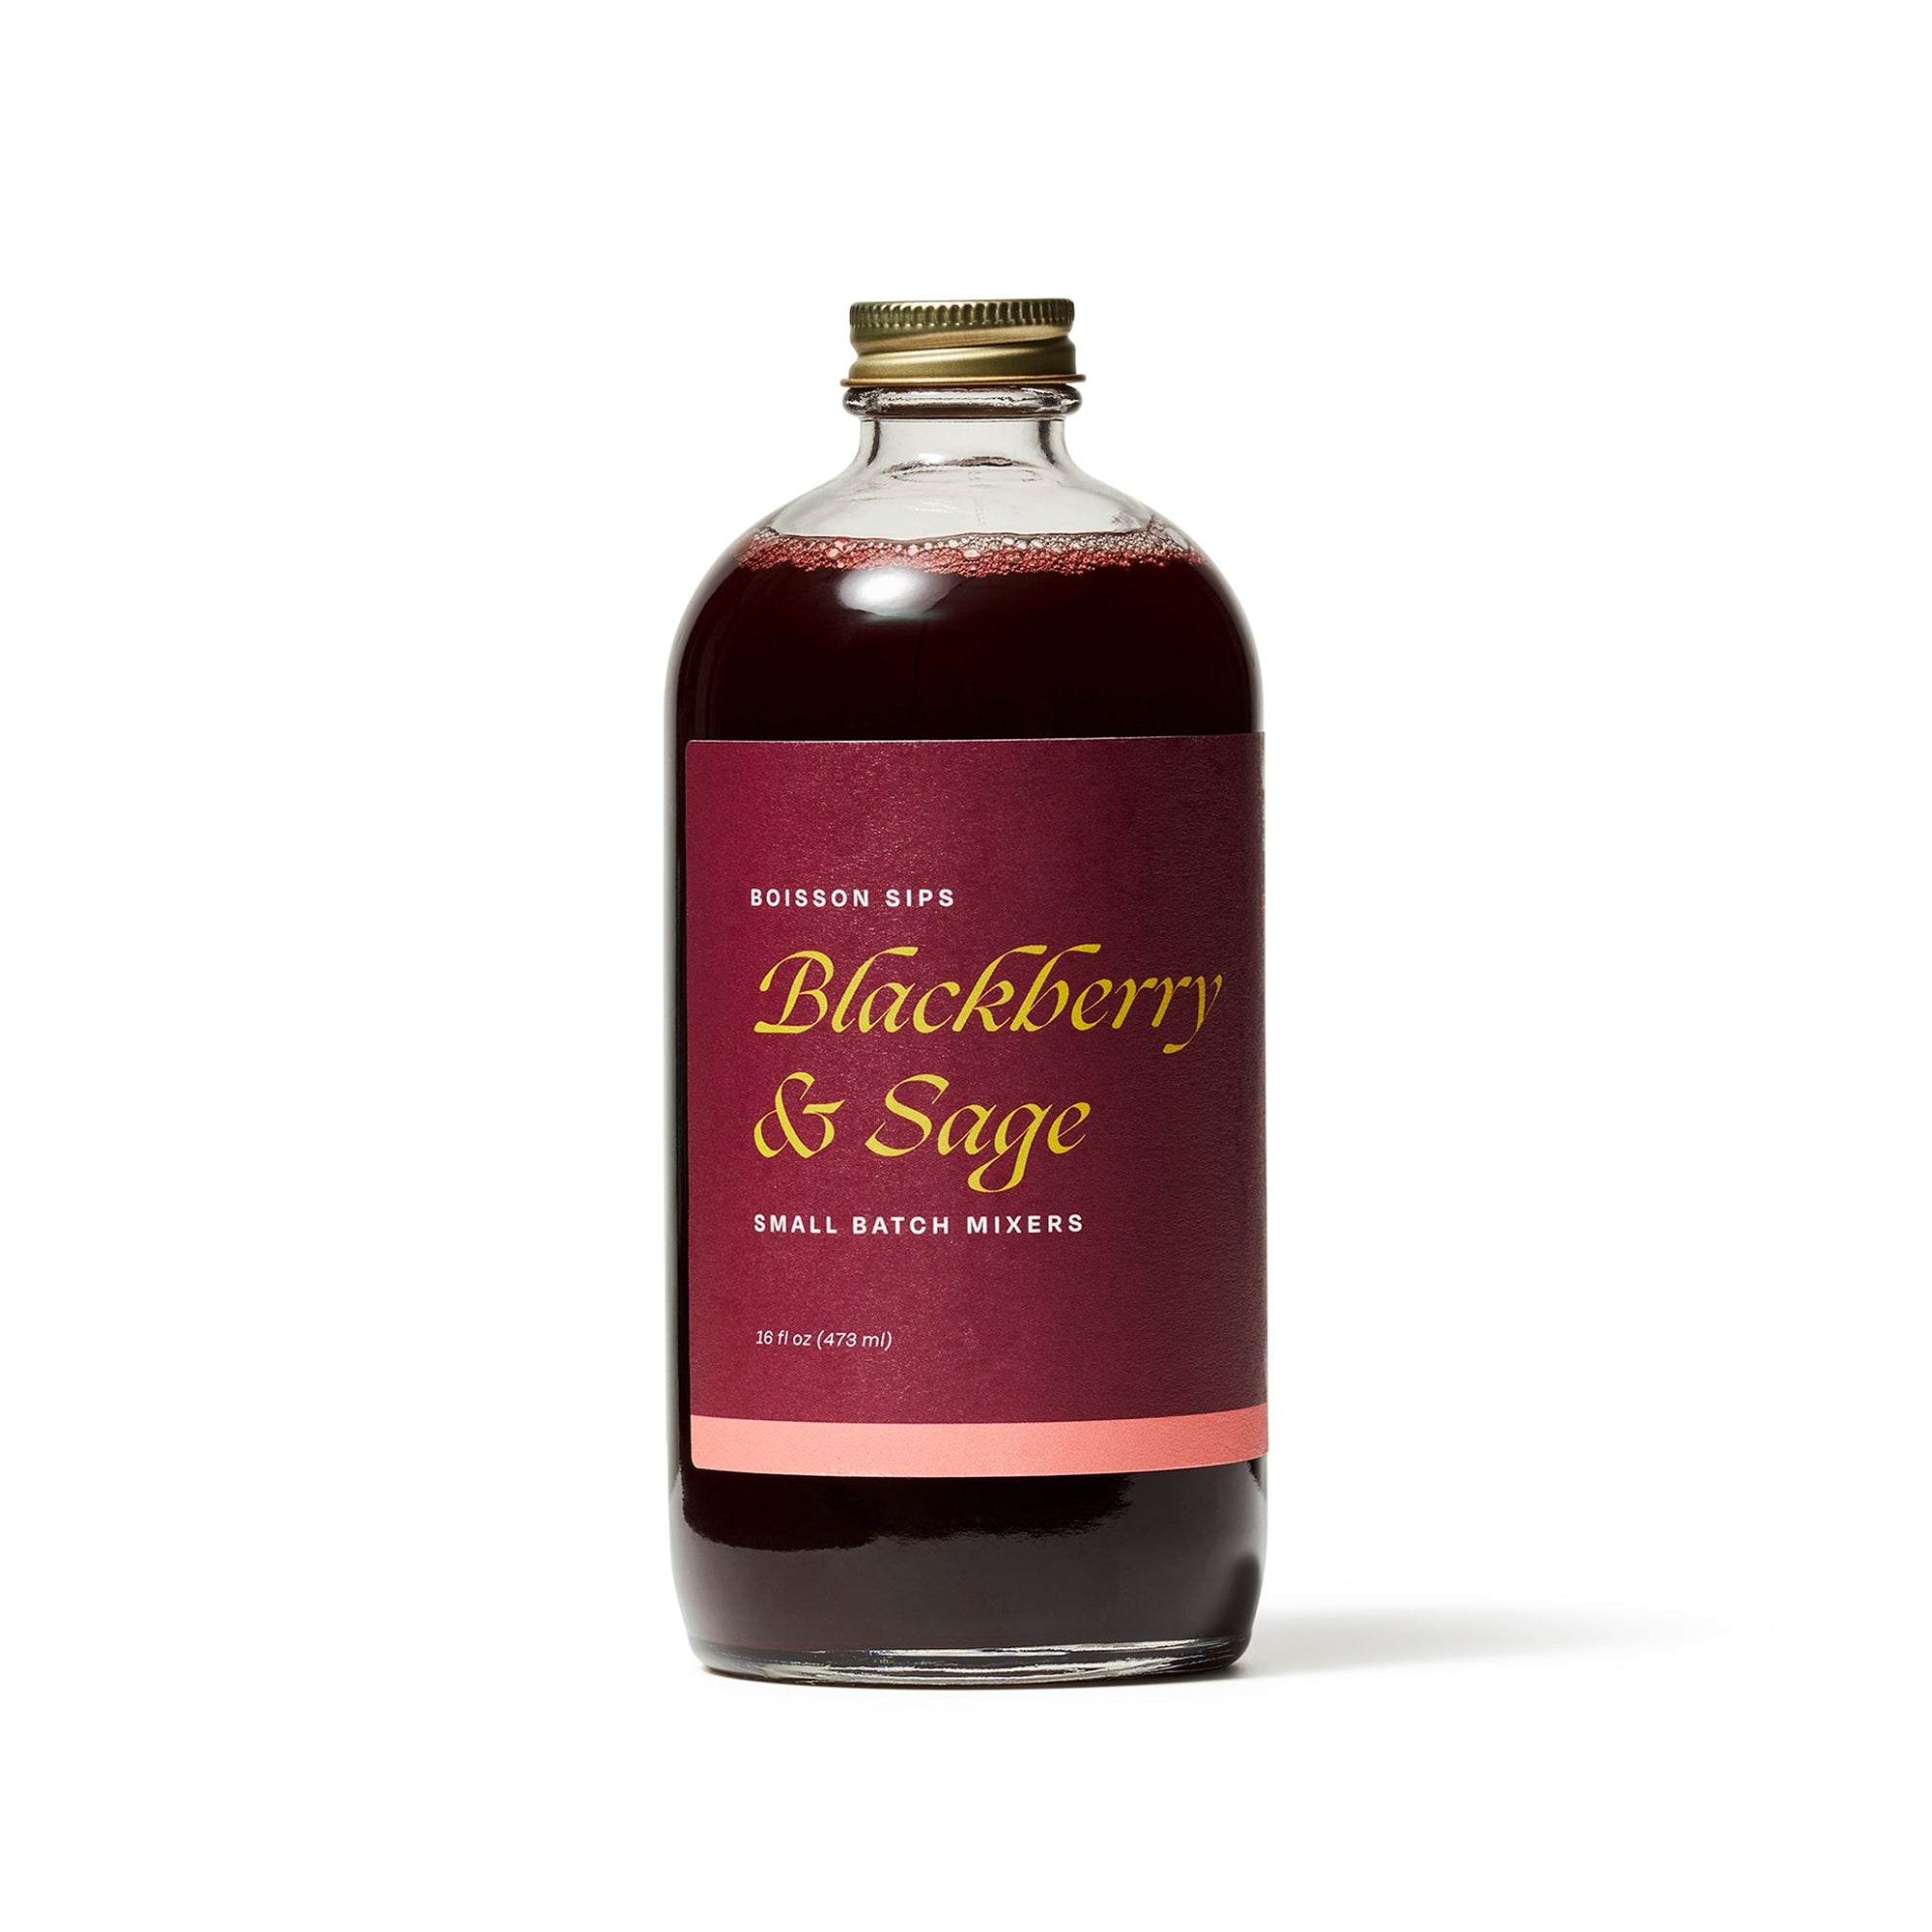 Wood Stove Kitchen - Boisson Sips Blackberry & Sage Small Batch Mixers - Boisson